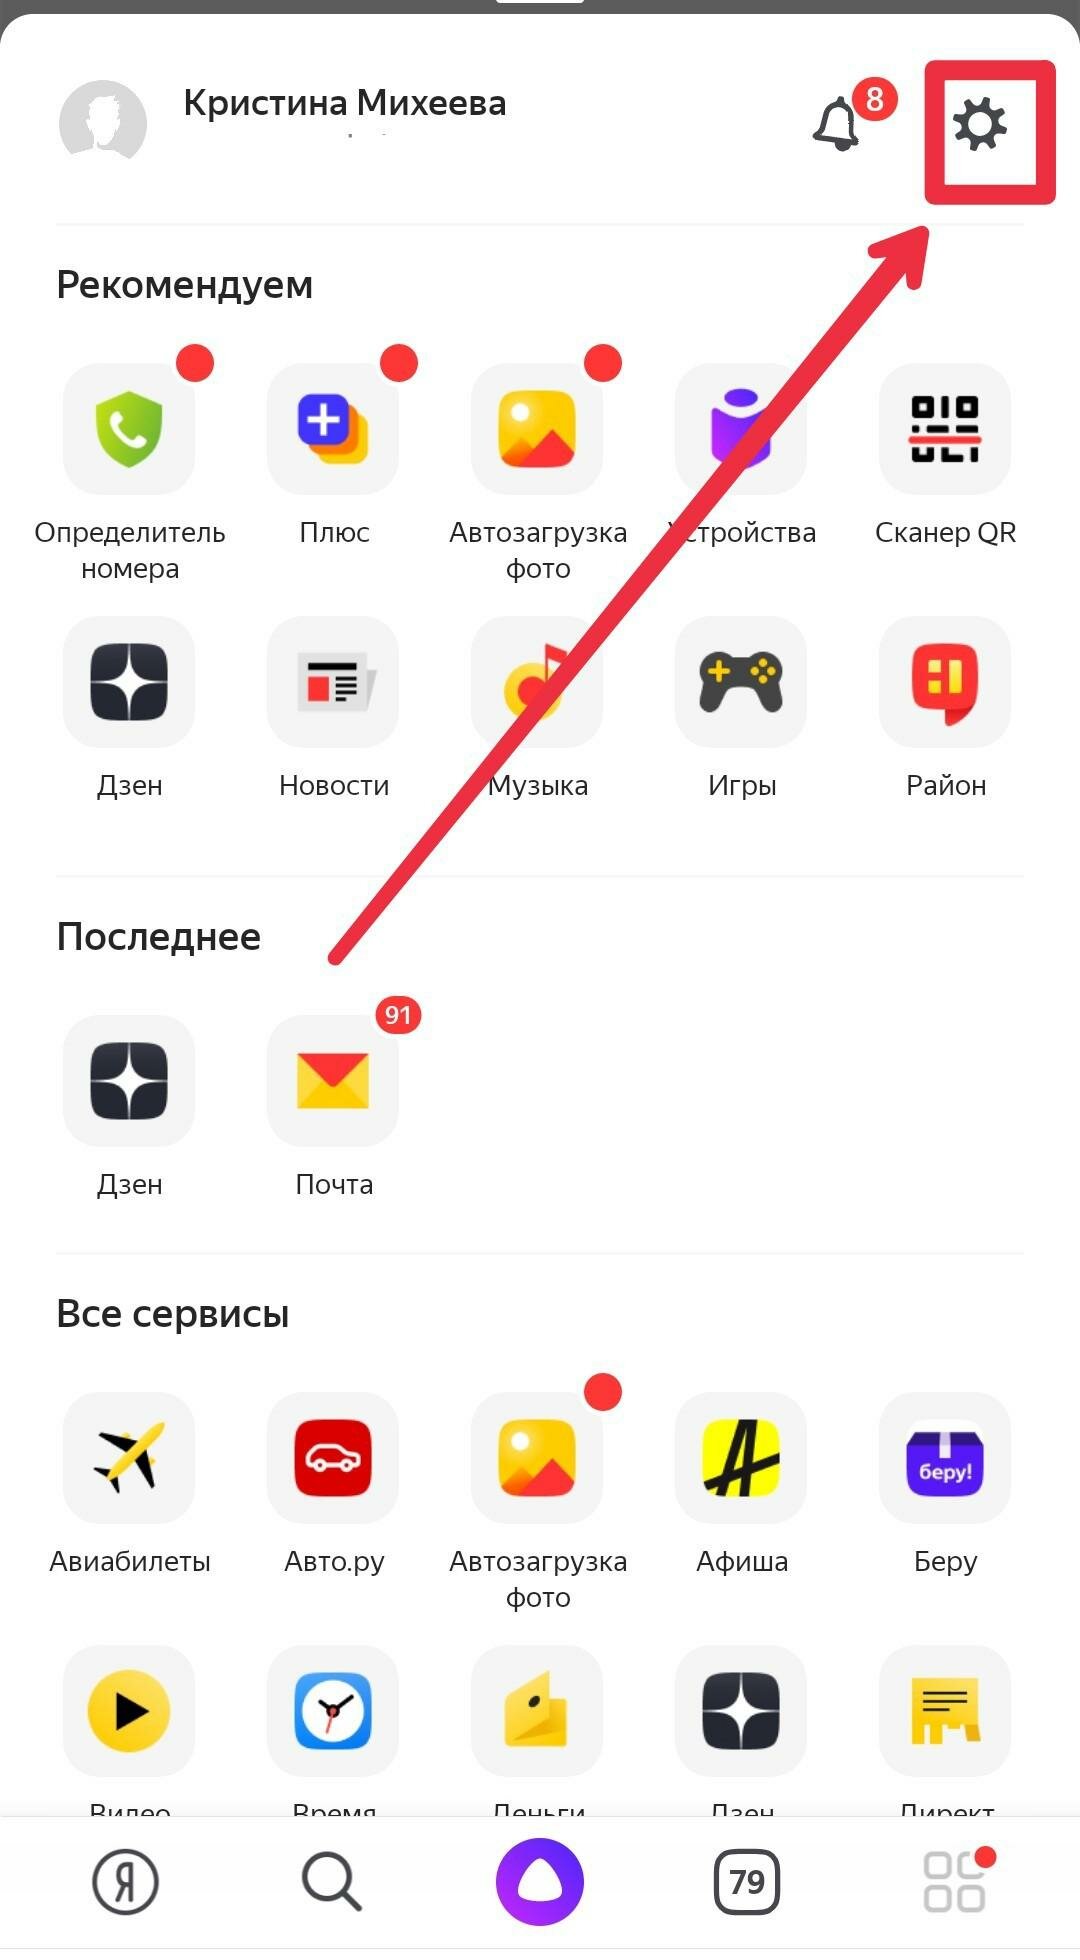 Значок алиса на экран телефона. Значок Яндекса на телефоне.